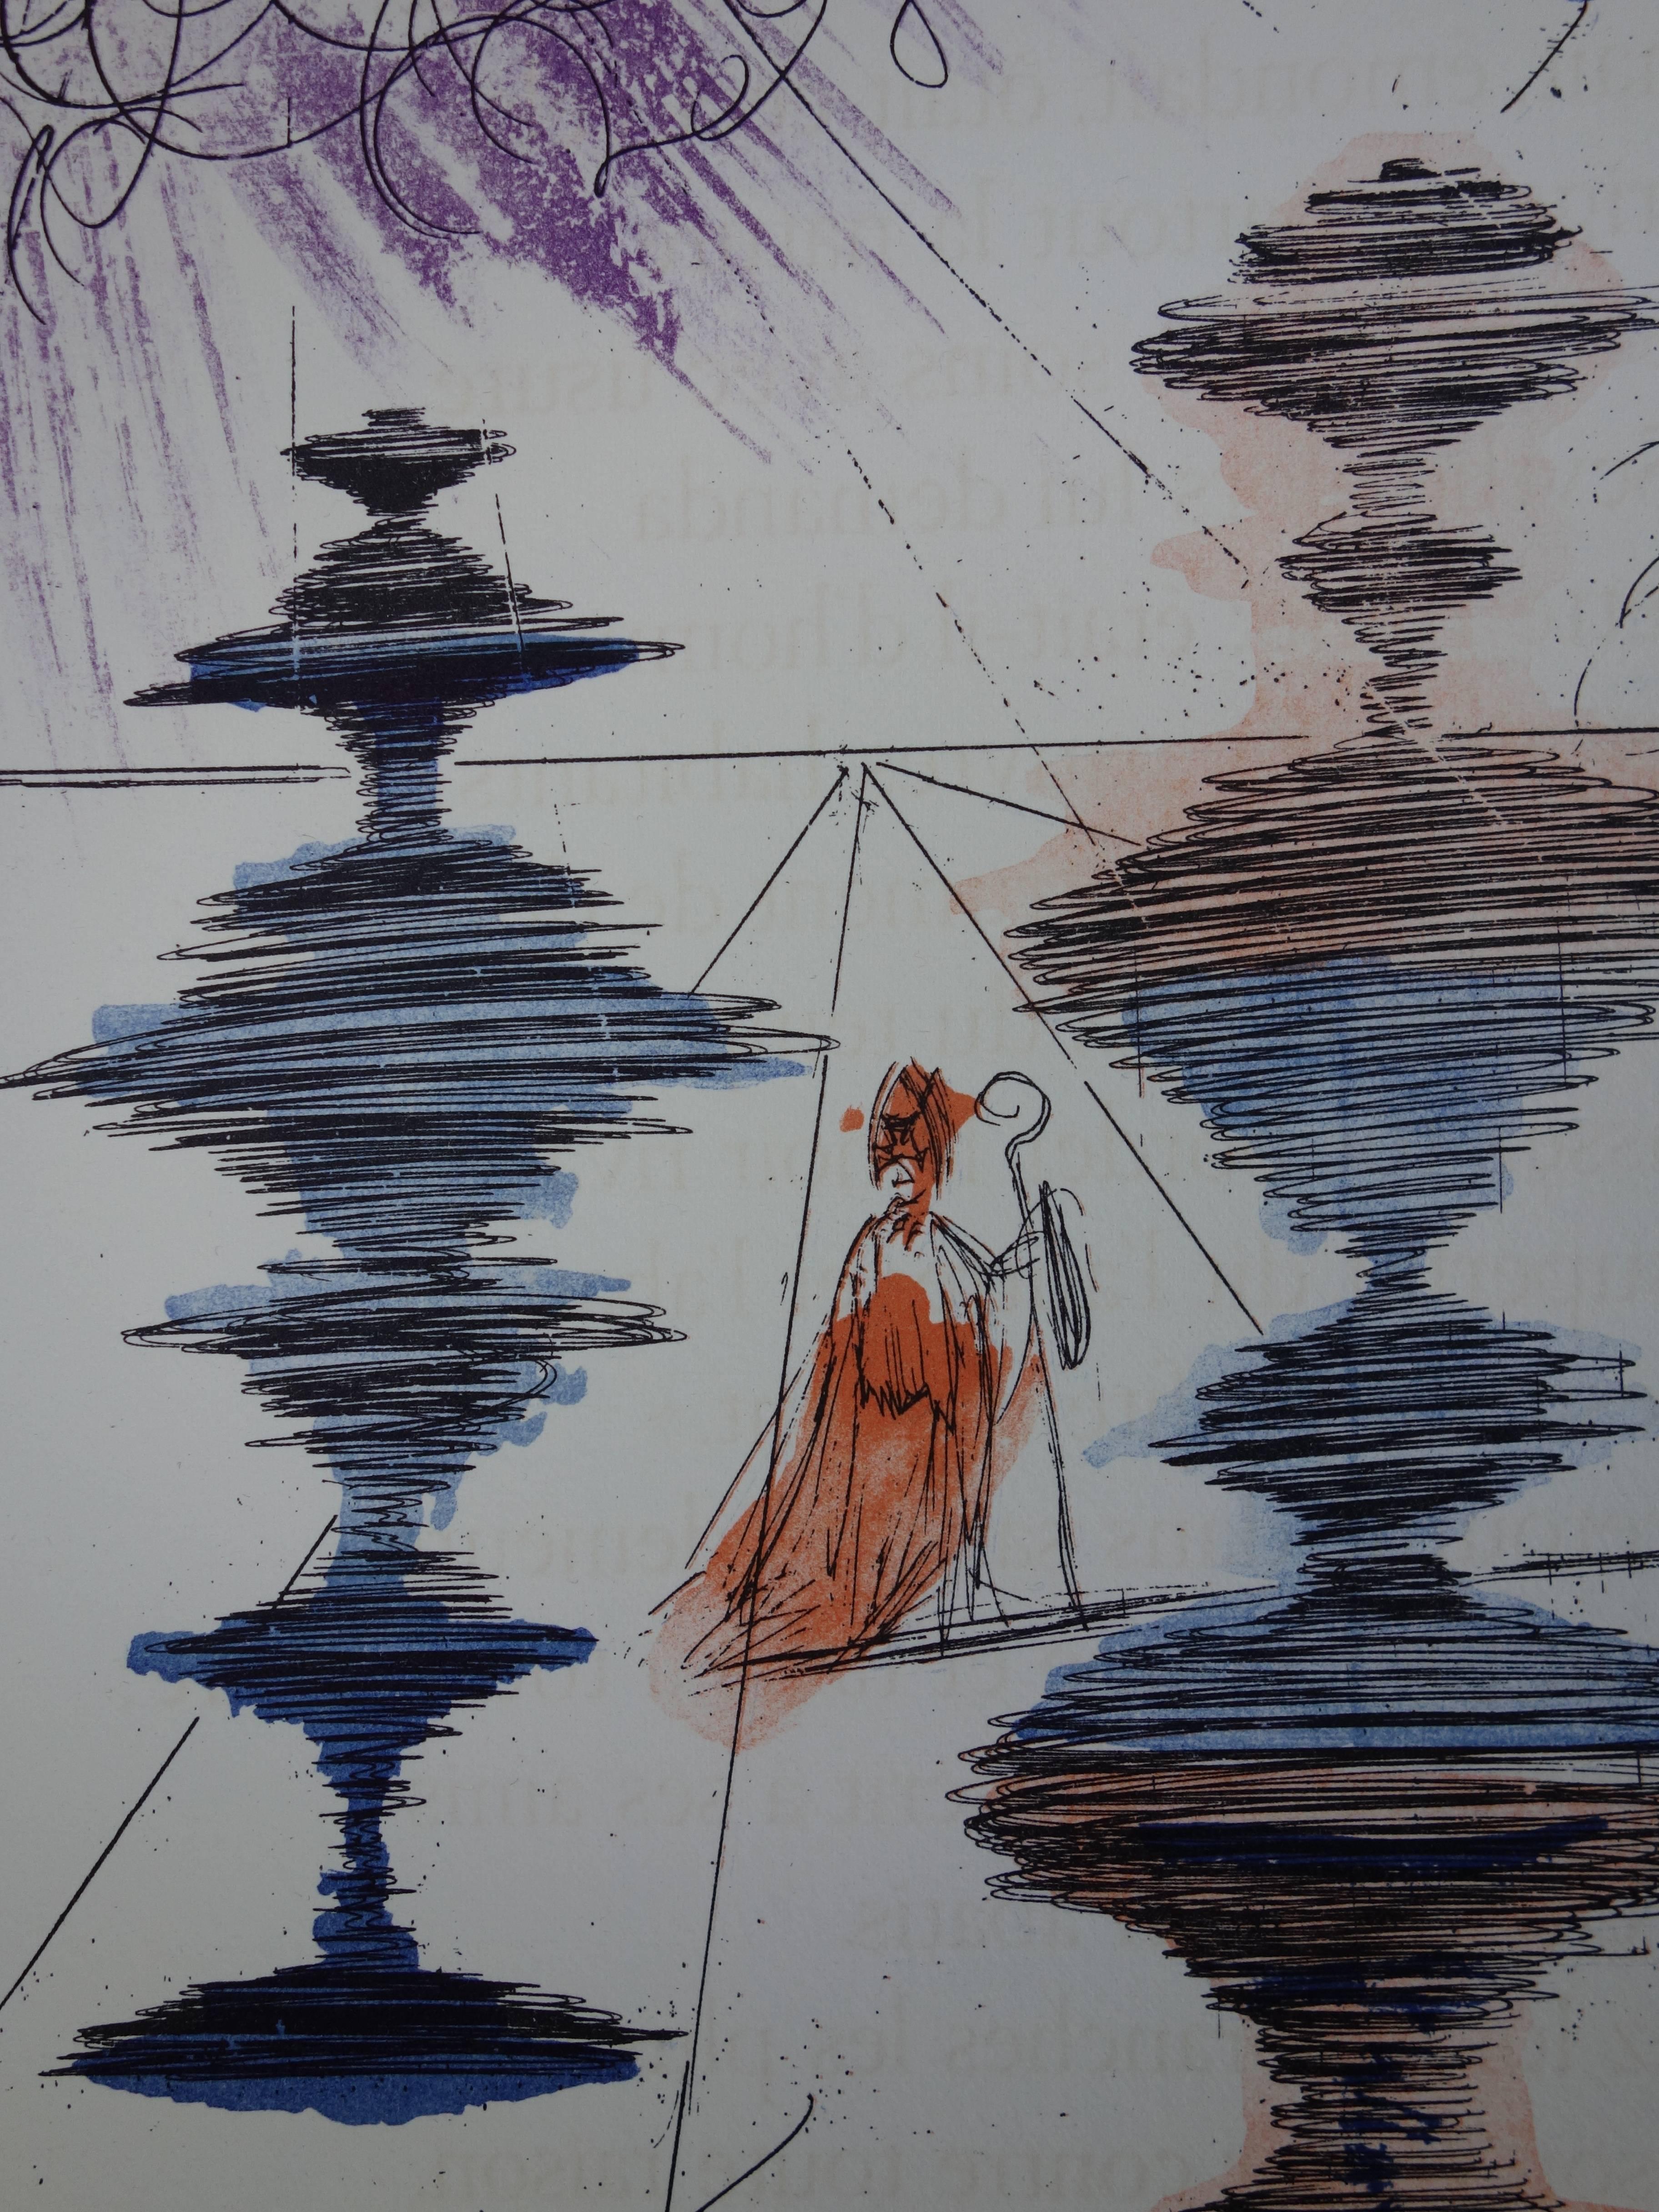 The Scythe Philosopher - Original handsigned lithograph - 1966 - Gray Figurative Print by Salvador Dalí